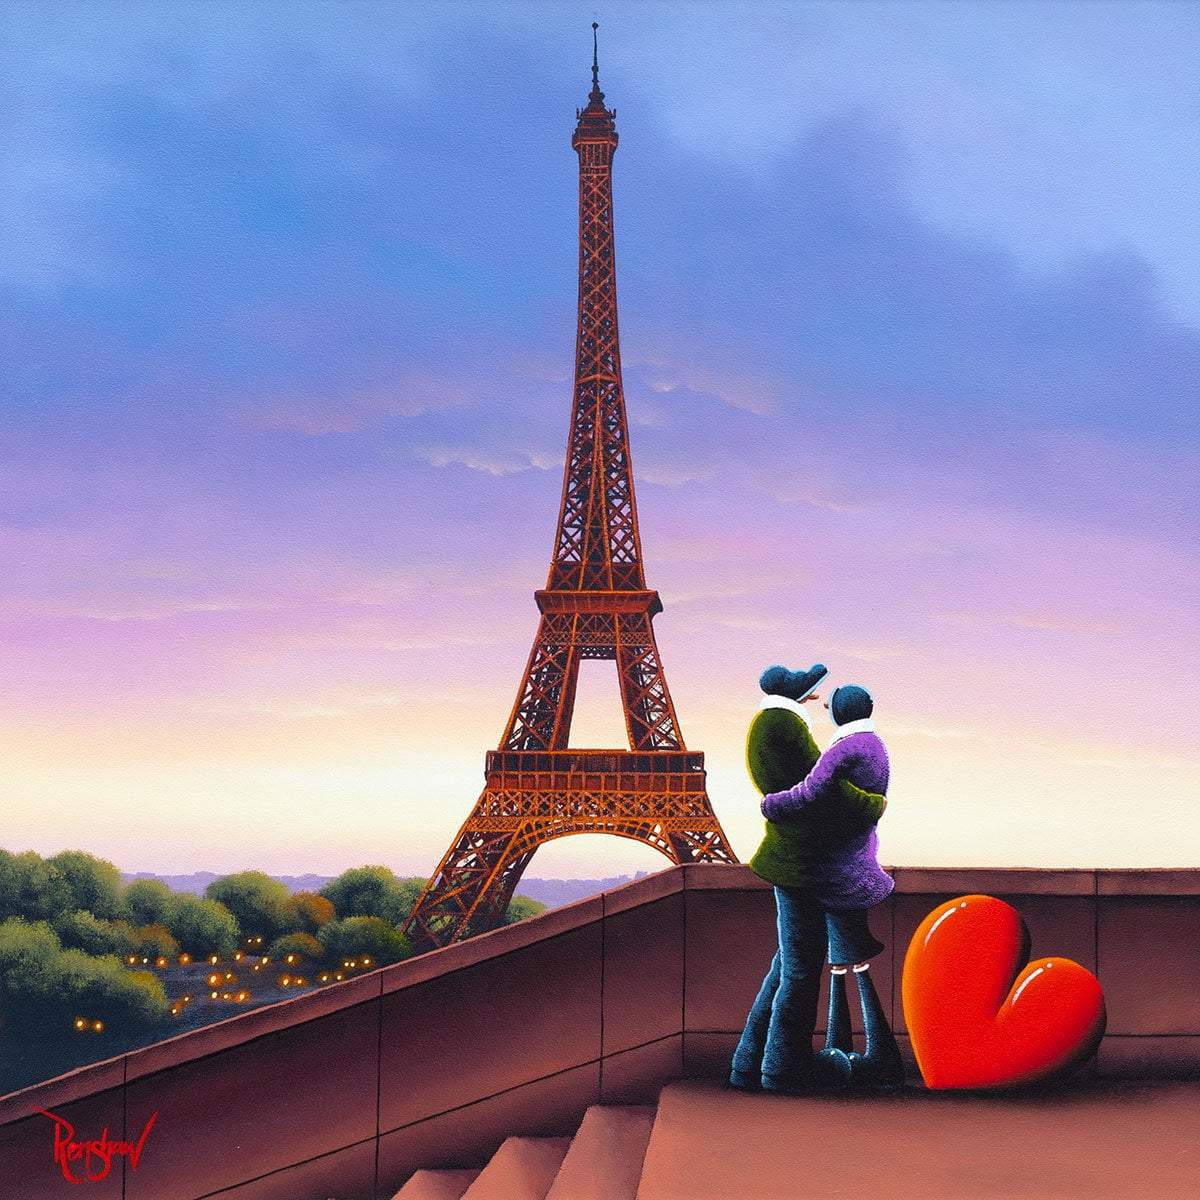 In Paris With You - Original - SOLD